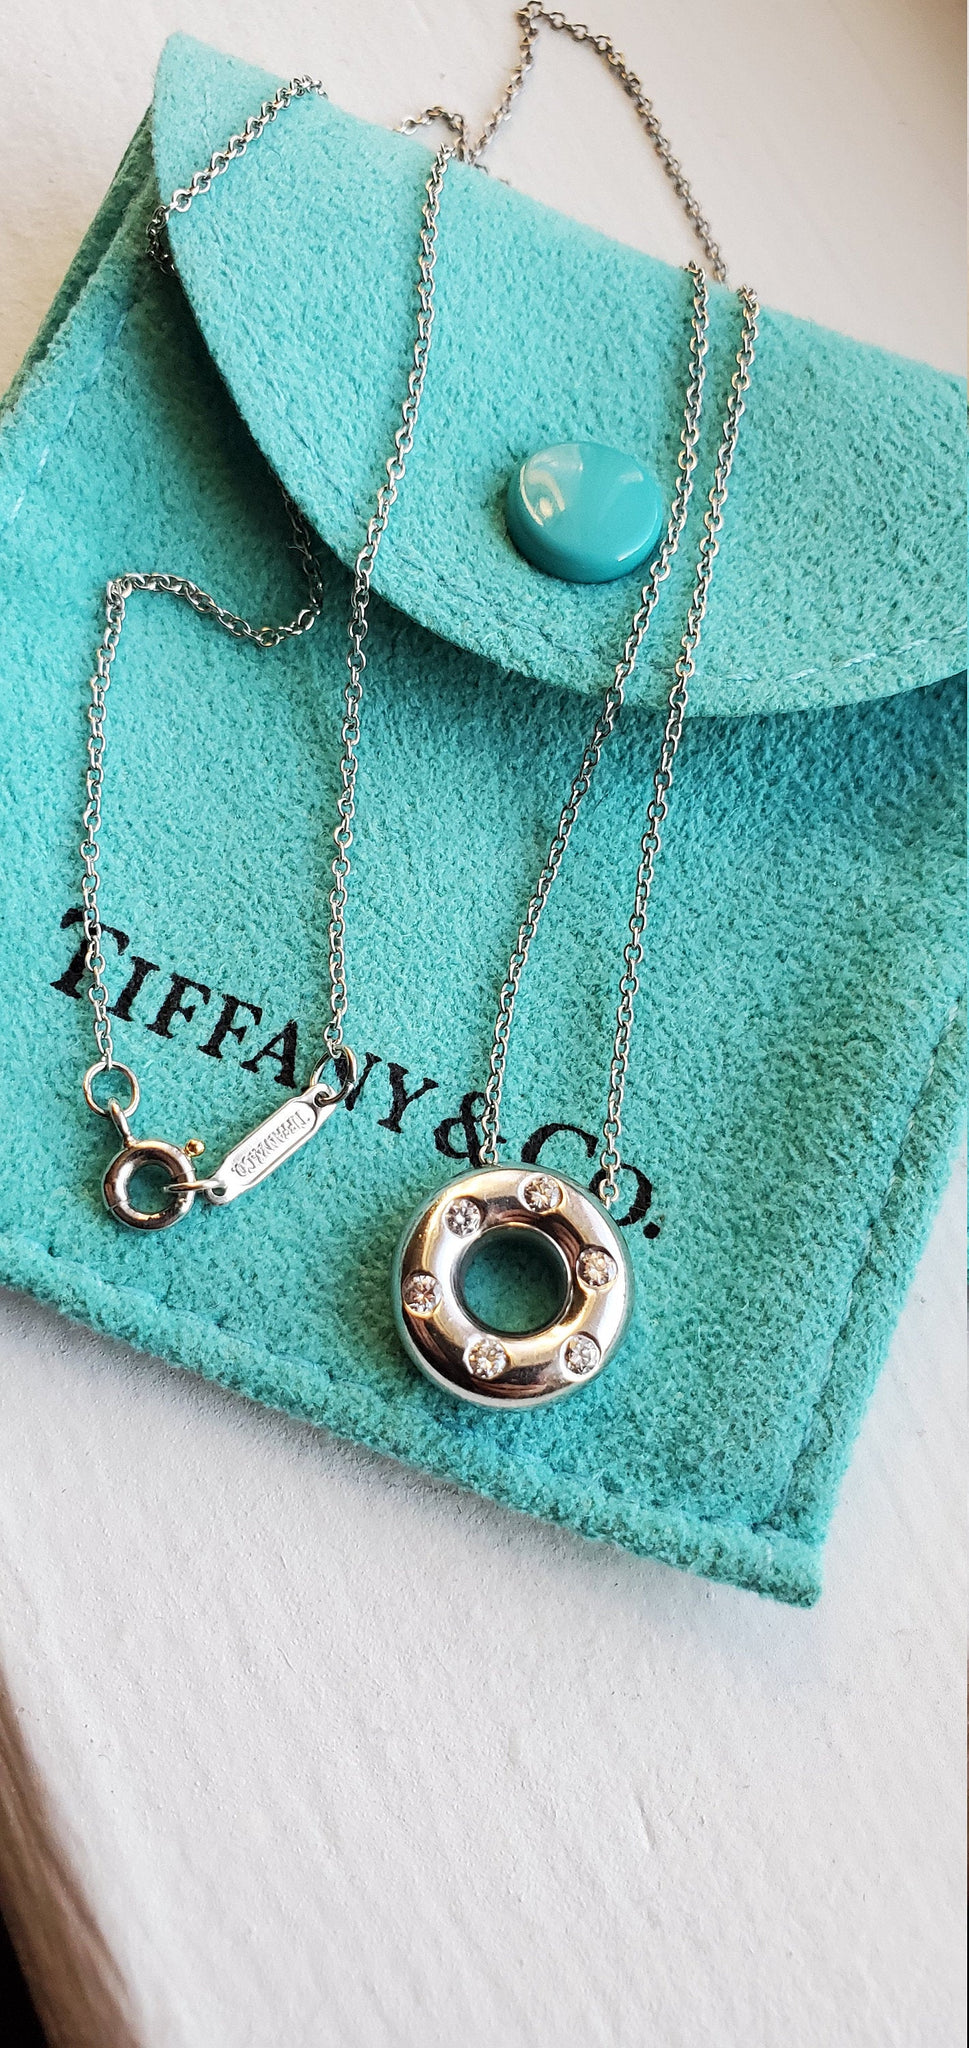 Tiffany & Co. Diamond Station Necklace in Platinum